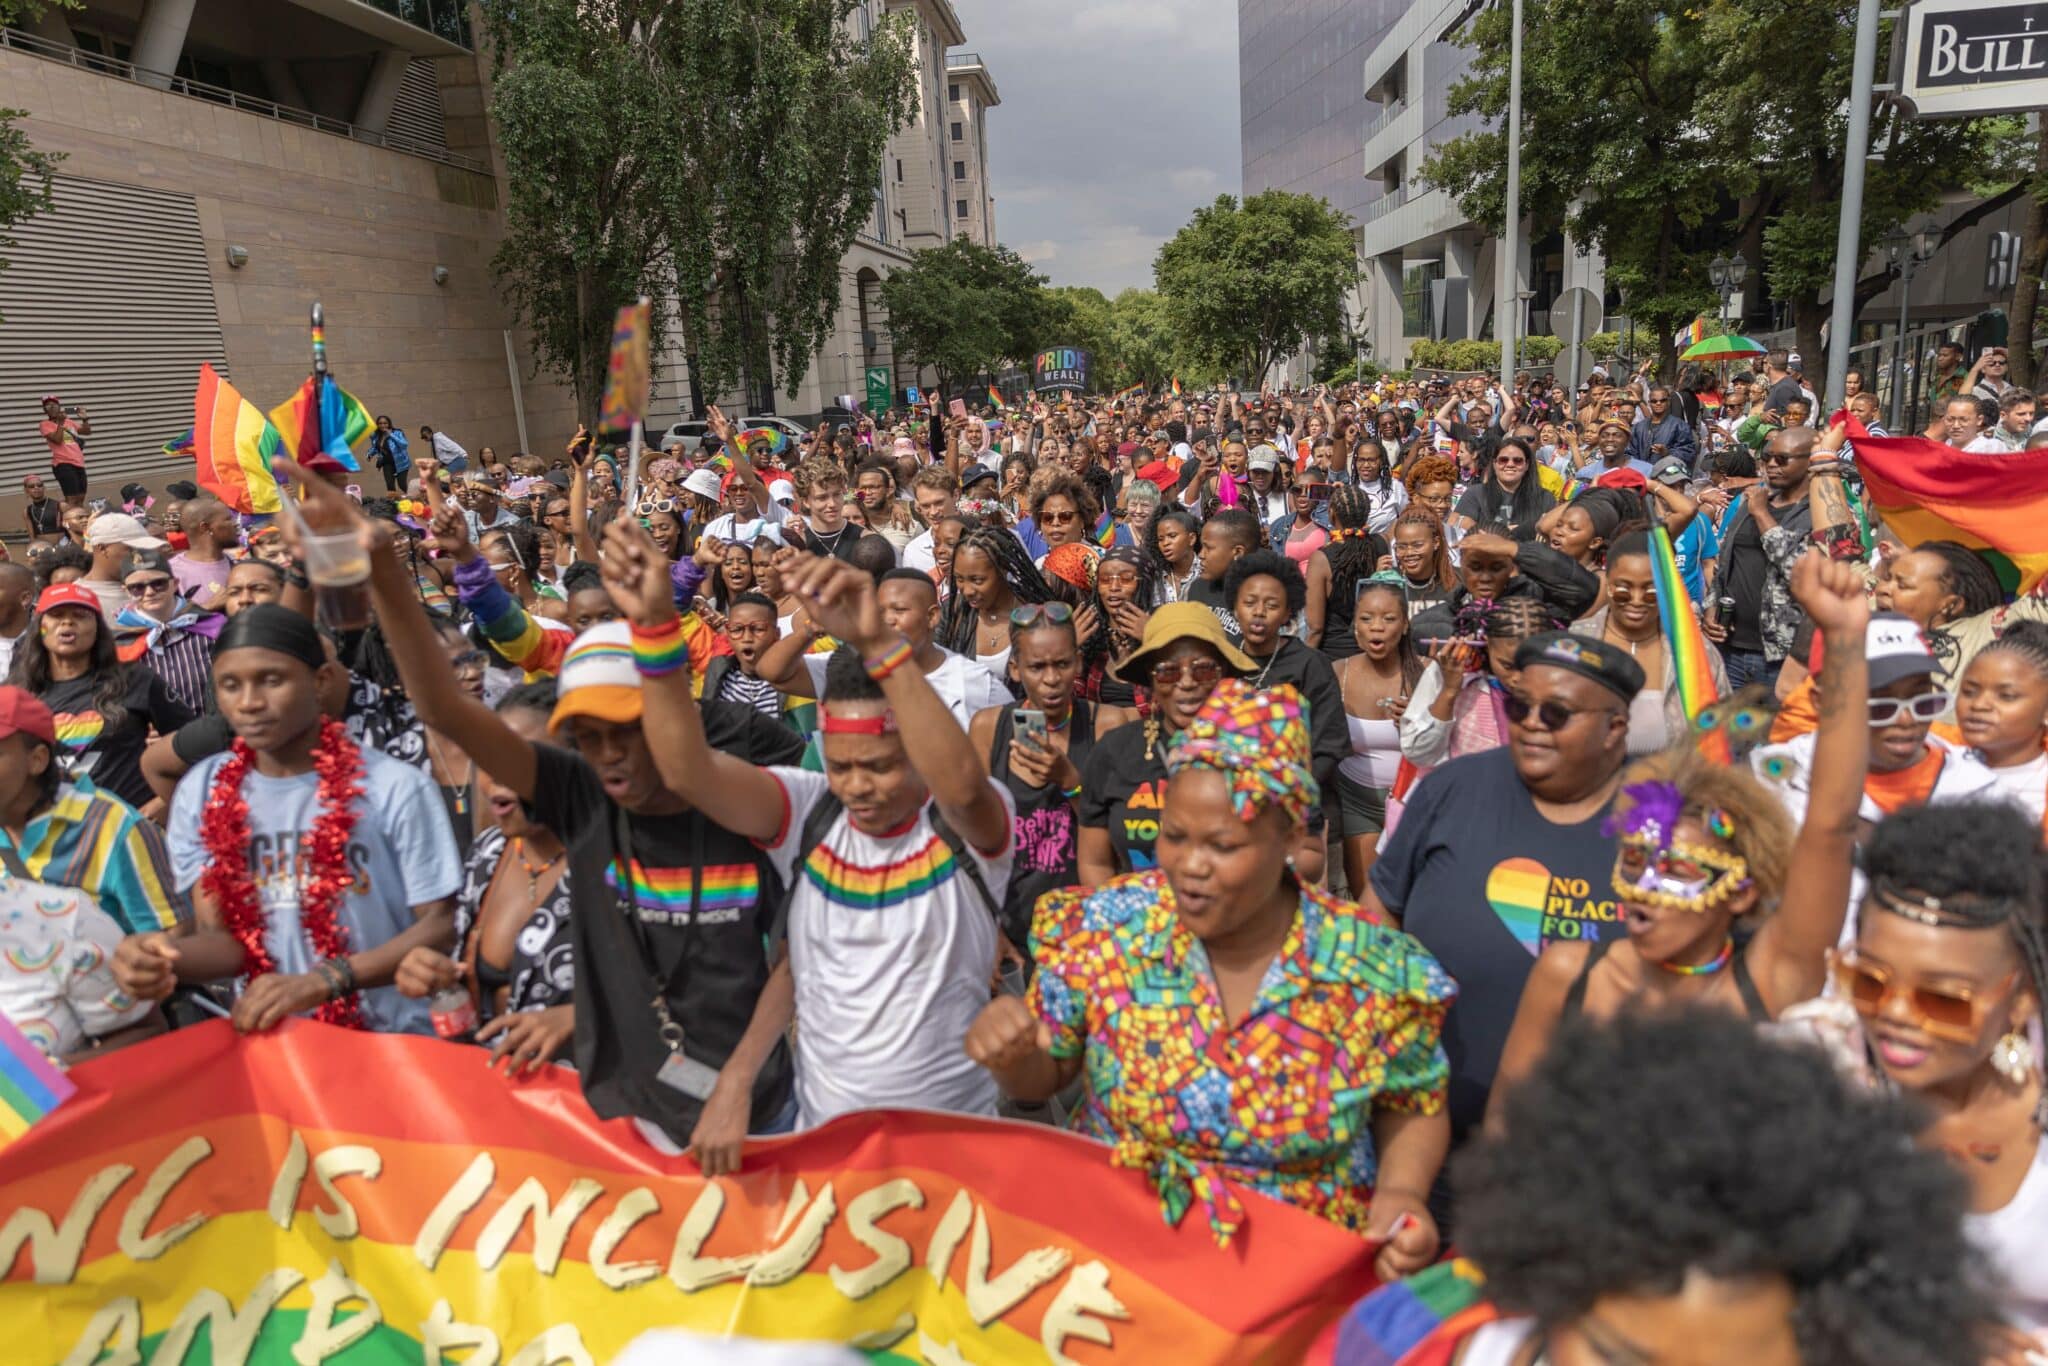 Johannesburg Pride goes ahead despite bomb threat